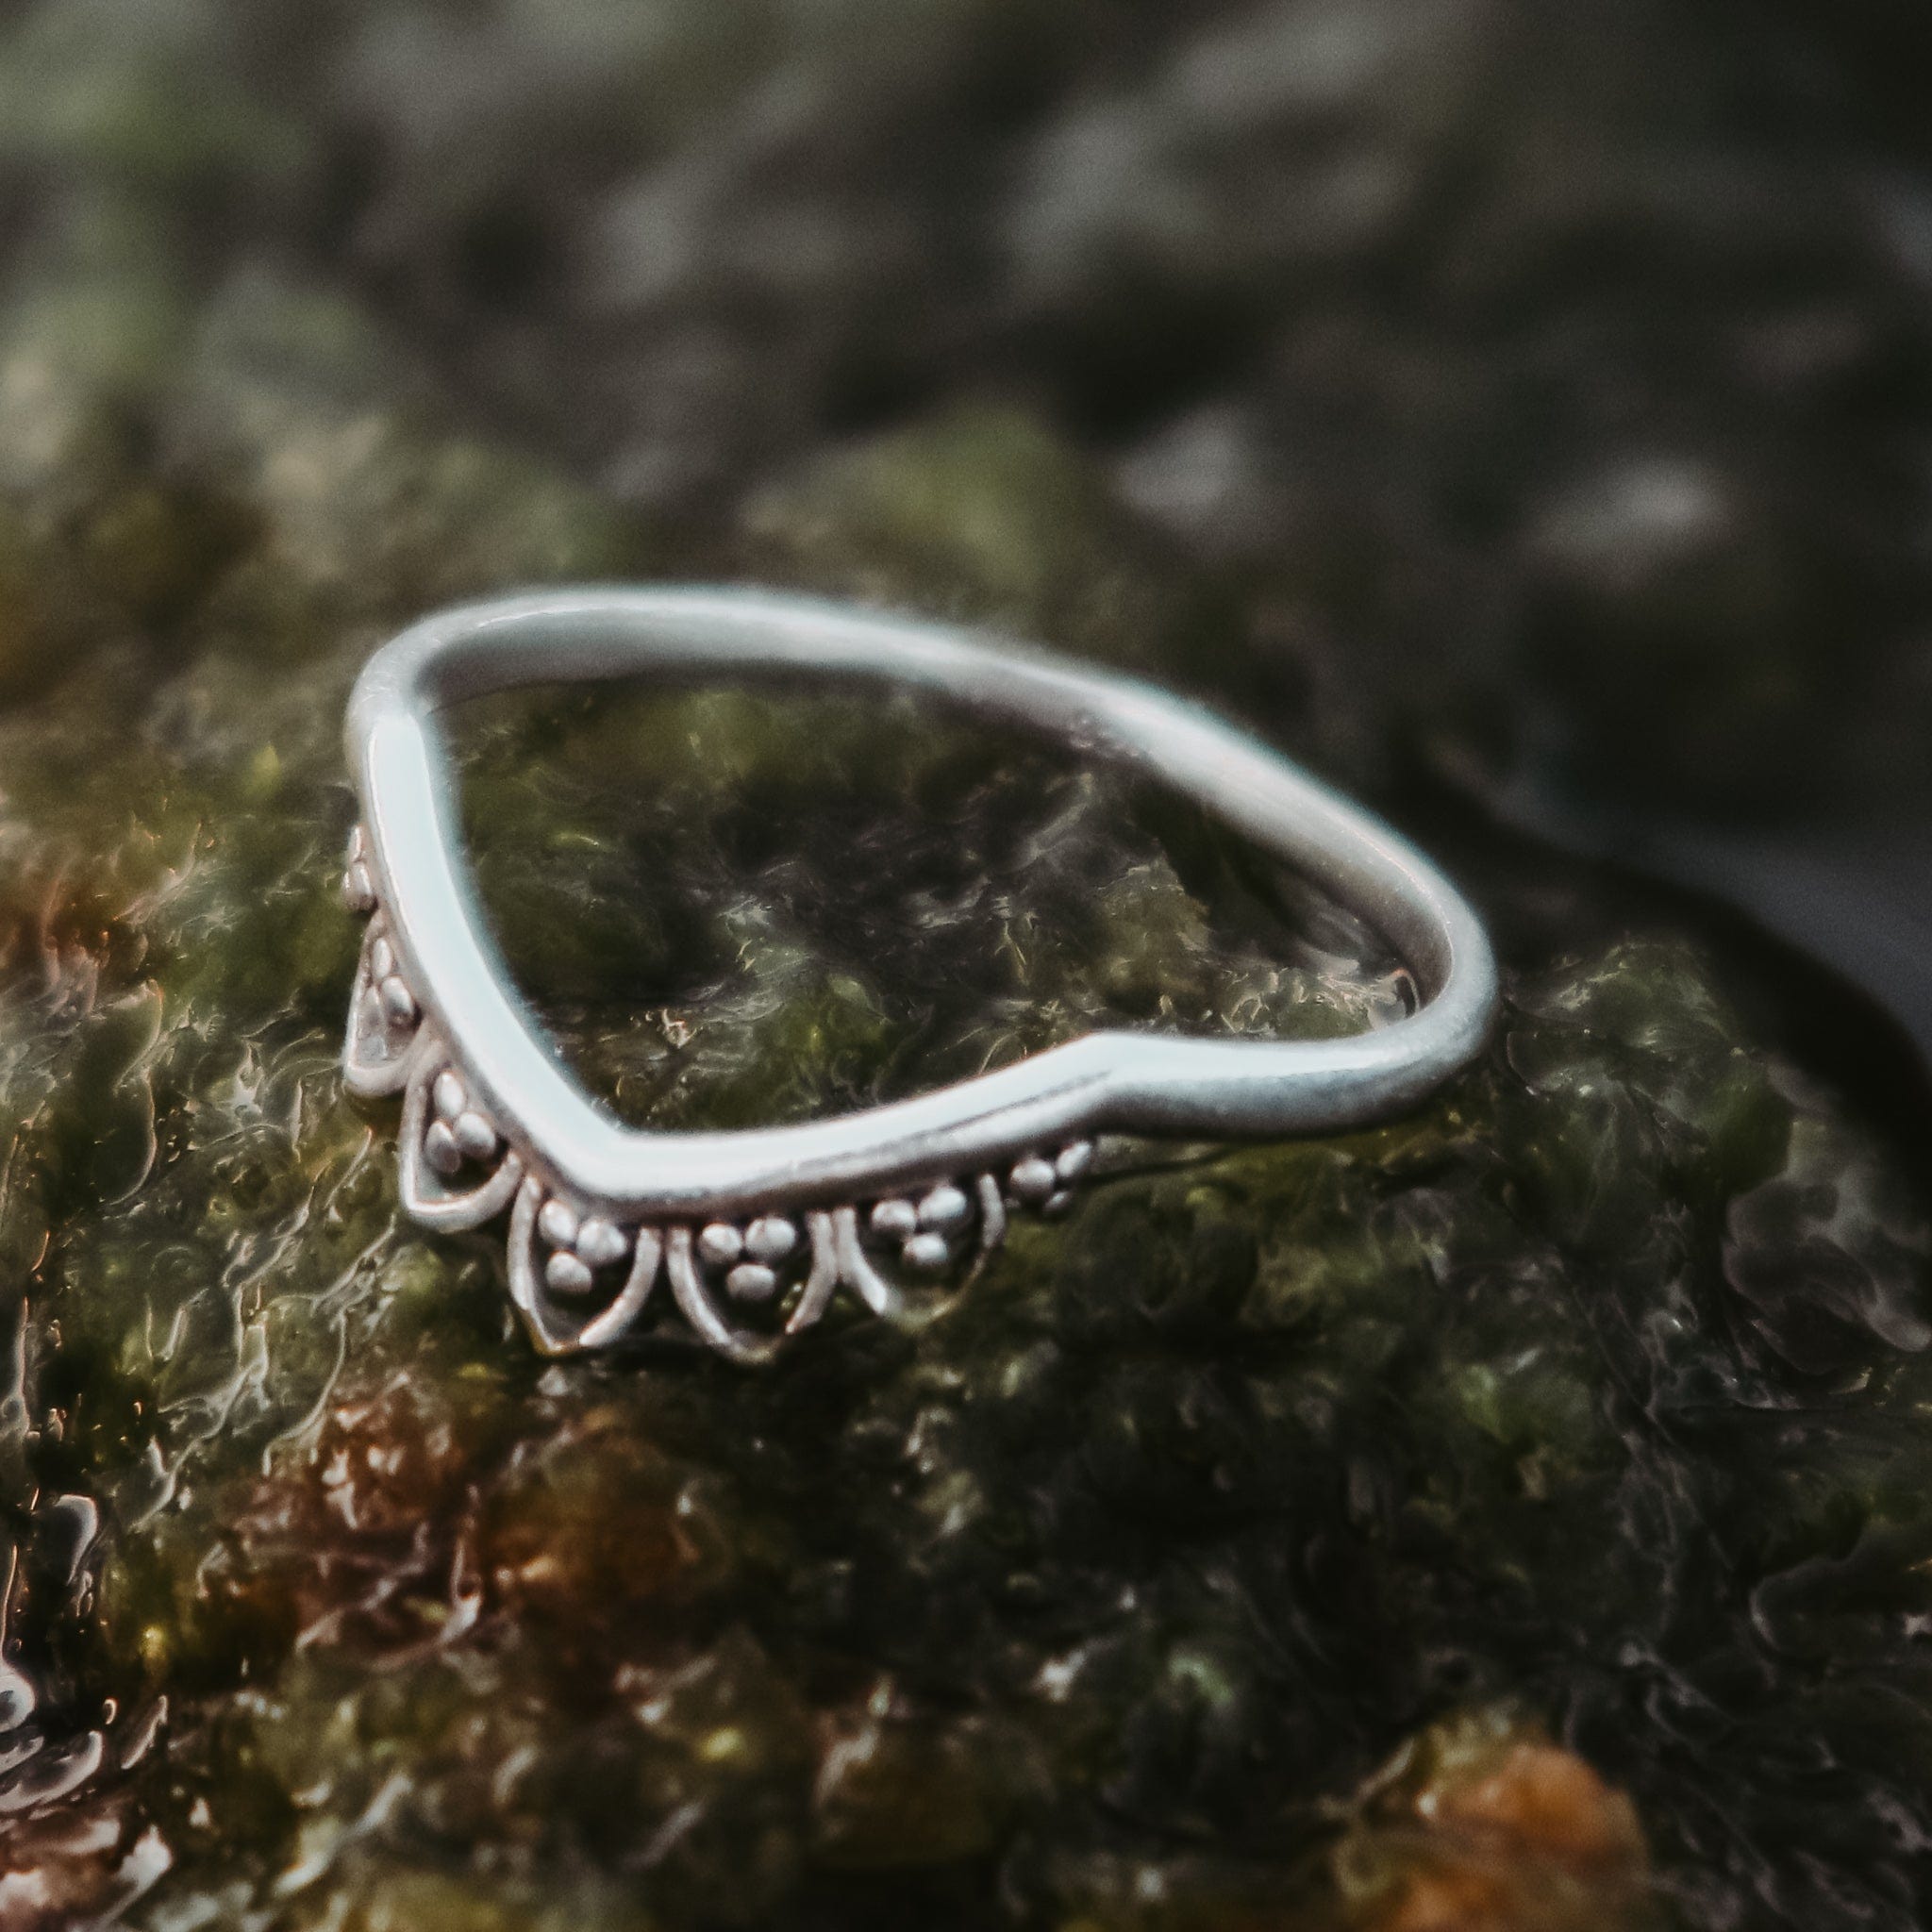 Diamond Crown Wedding Ring - Aurelius Jewelry